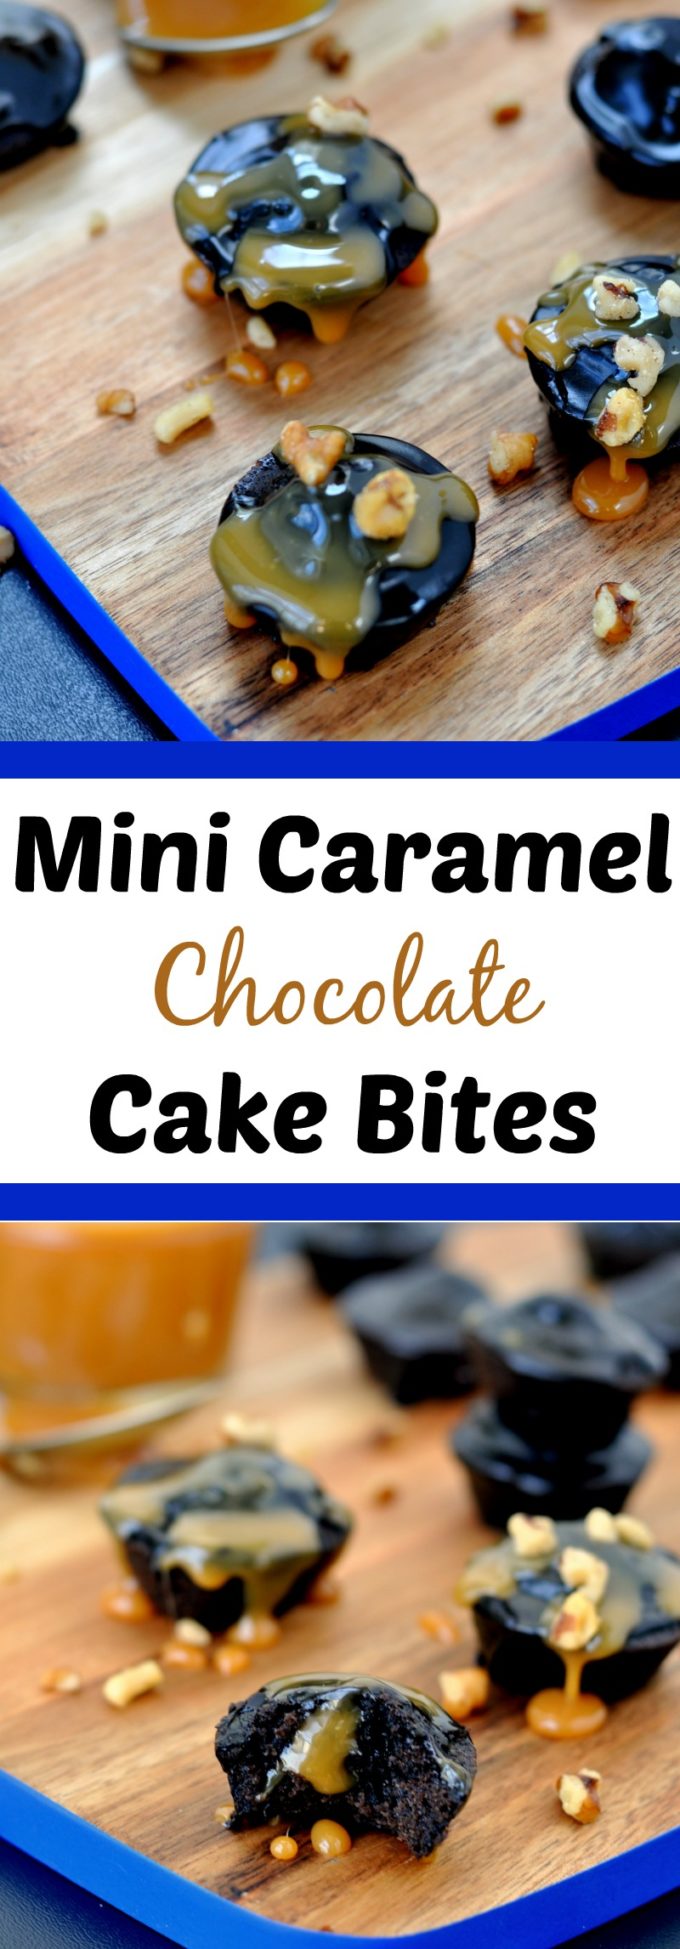 06 - mini-caramel-chocolate-cake-bites-pin